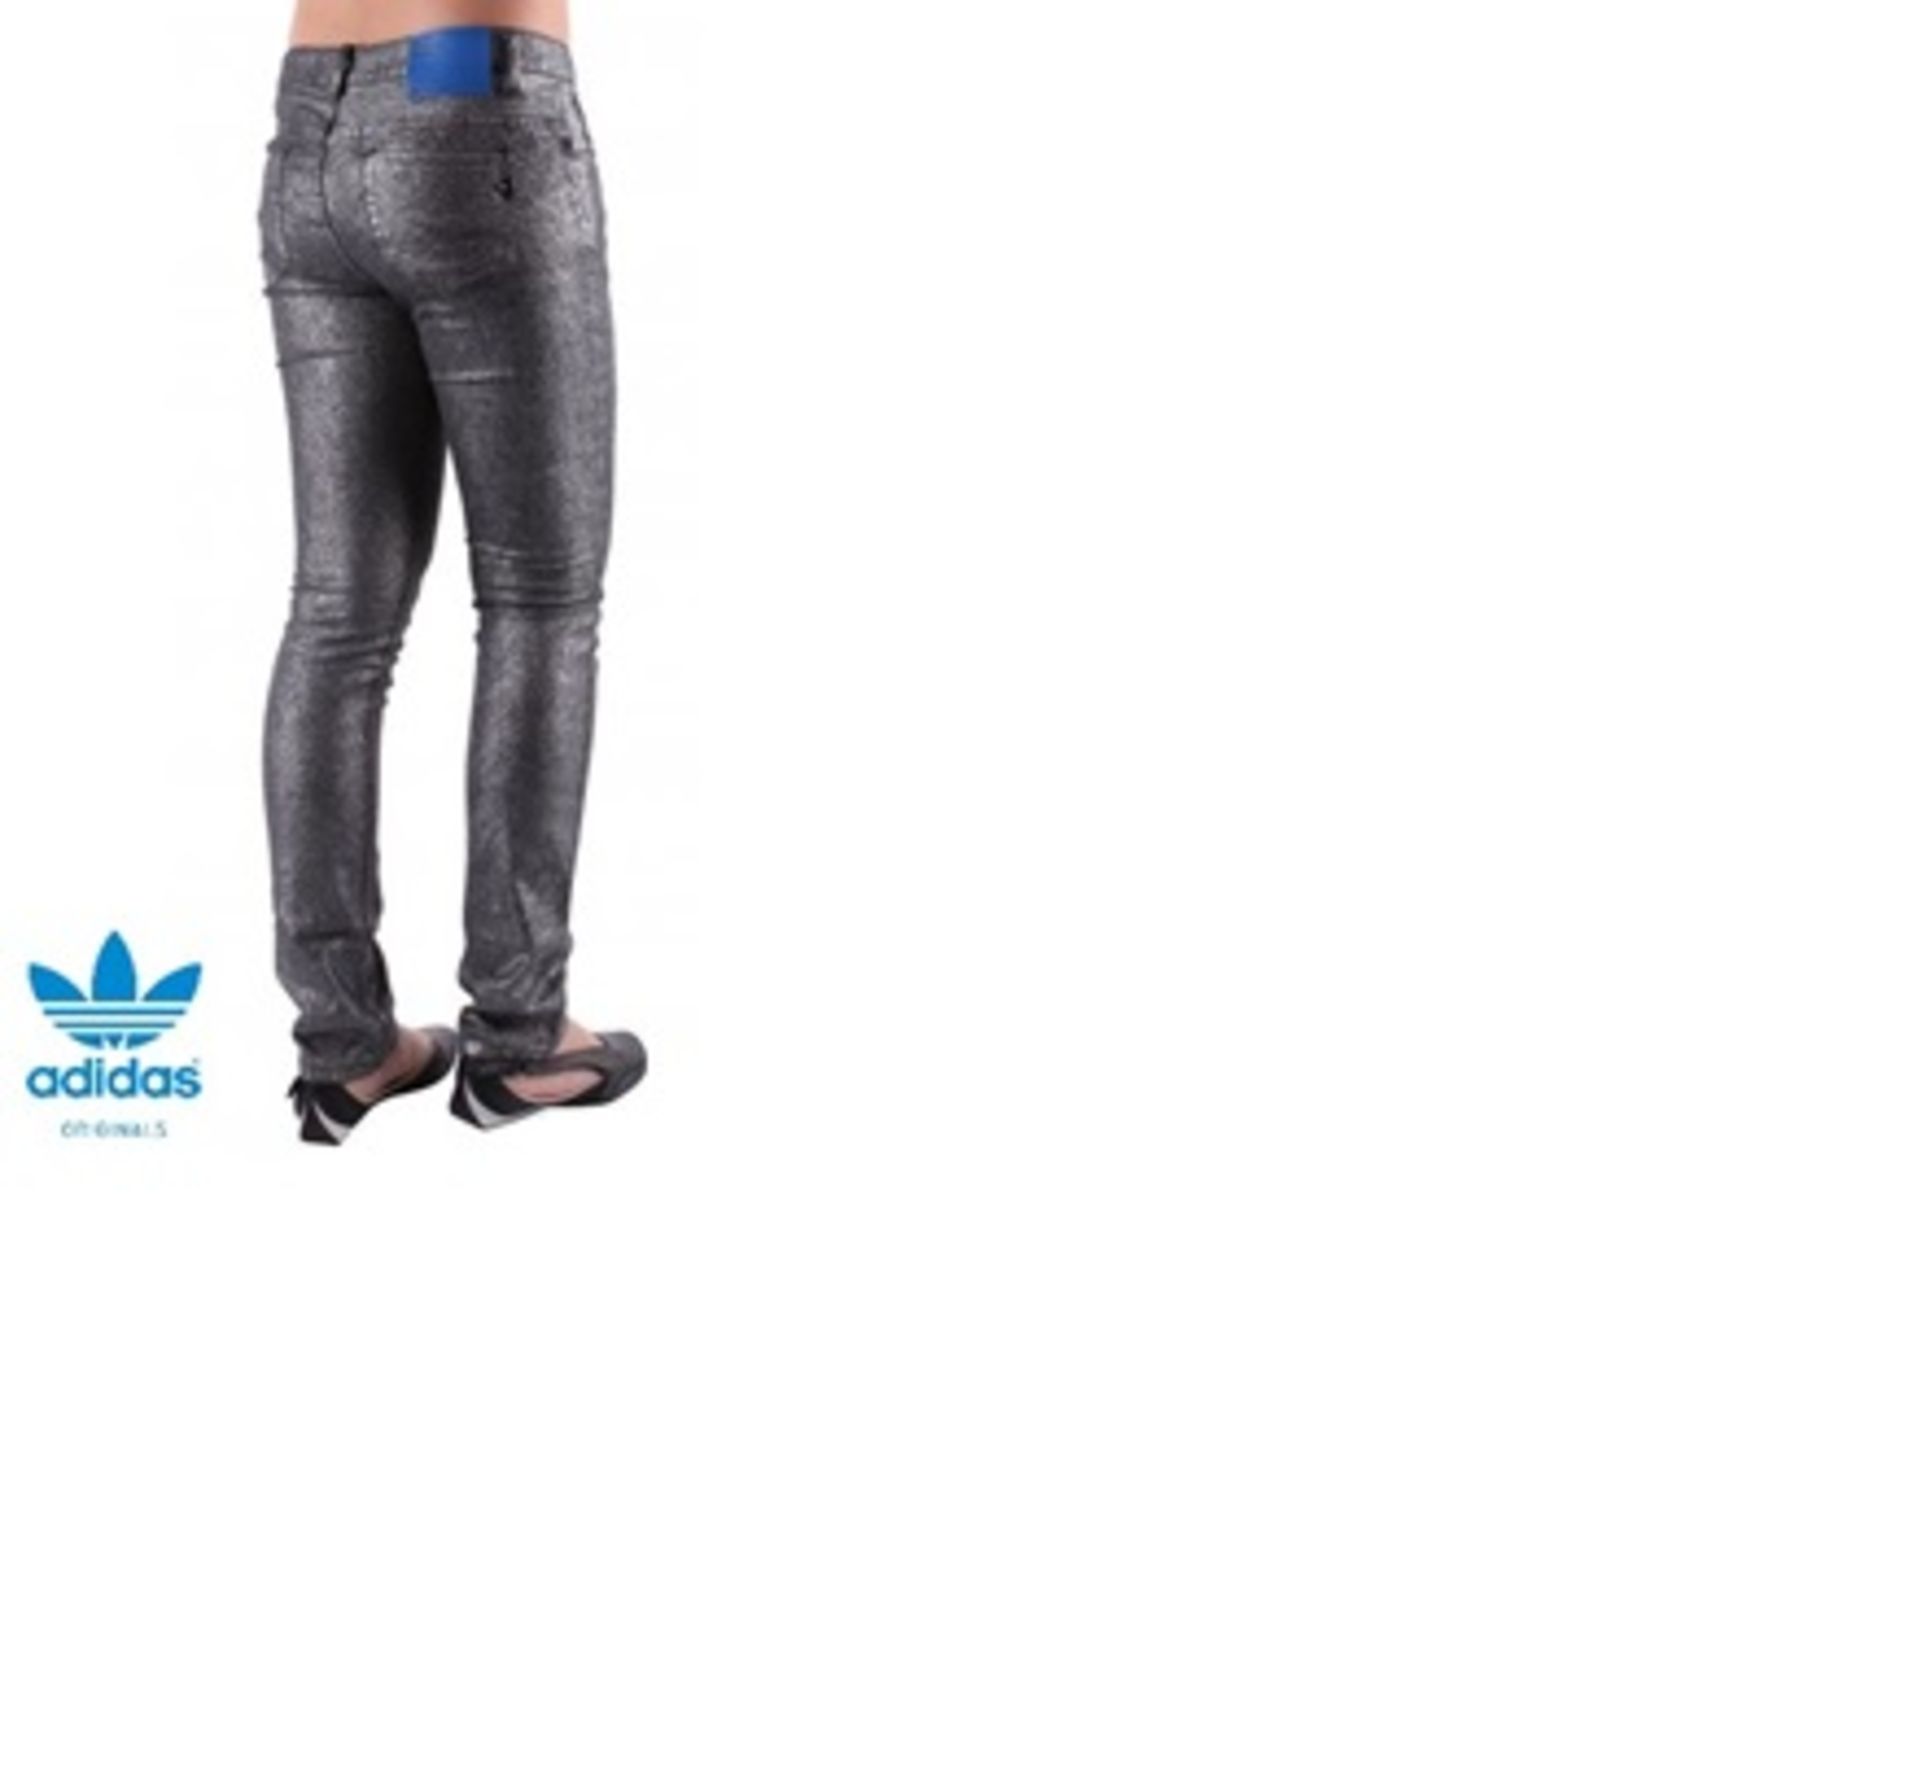 W38411 Women's Adidas Original Jeans - Image 2 of 3